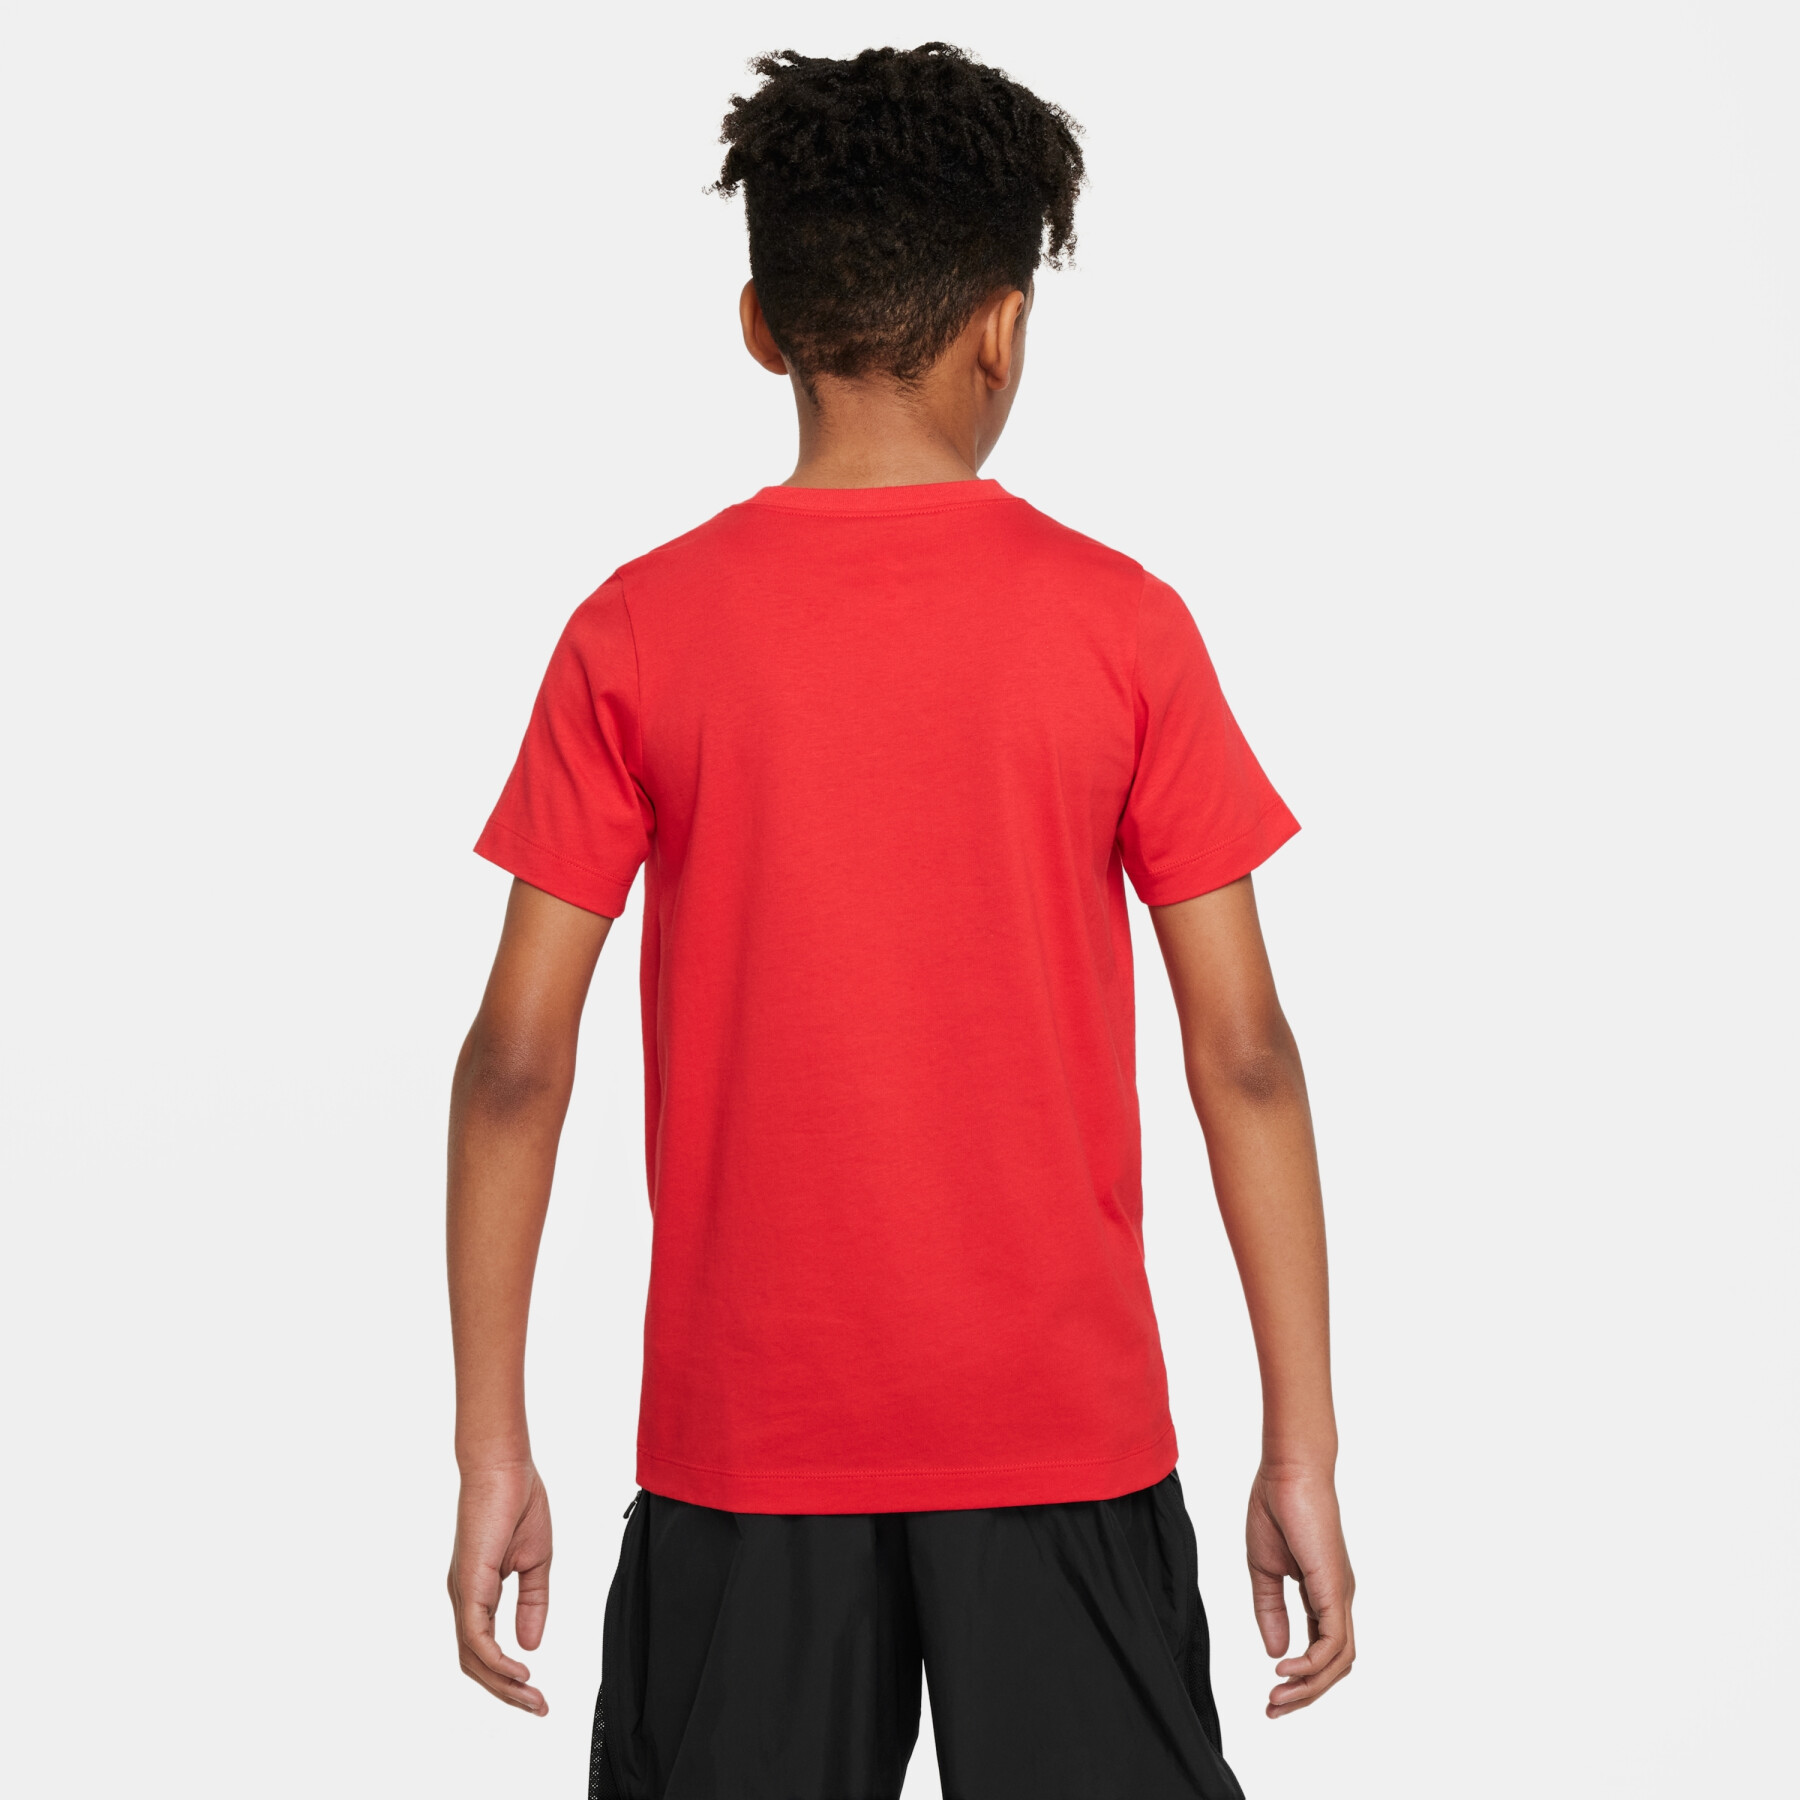 T-shirt enfant Nike